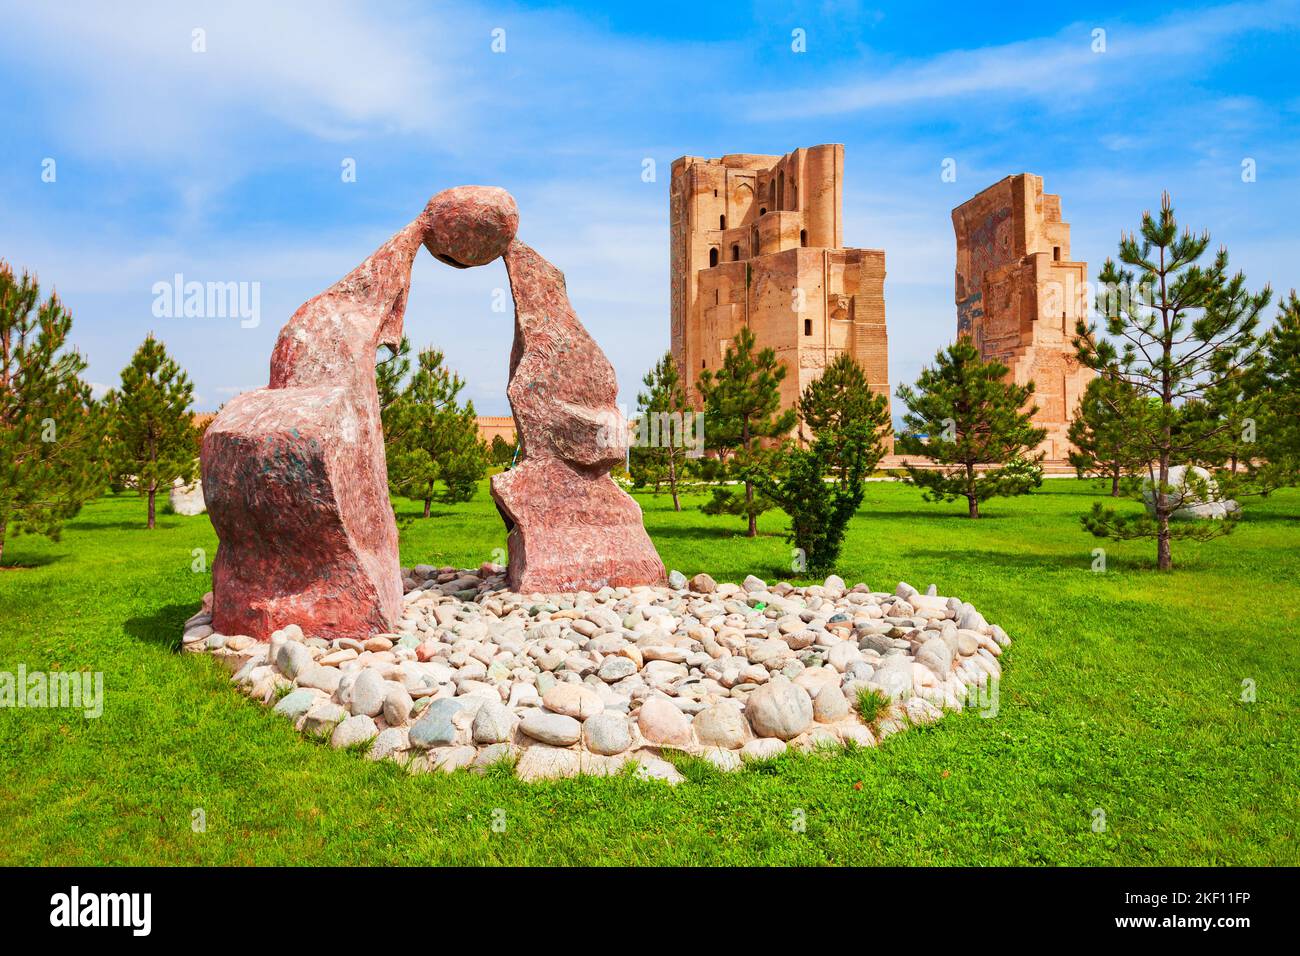 AK-Saray o Ak Saray Palace nella città di Shahrisabz in Uzbekistan Foto Stock